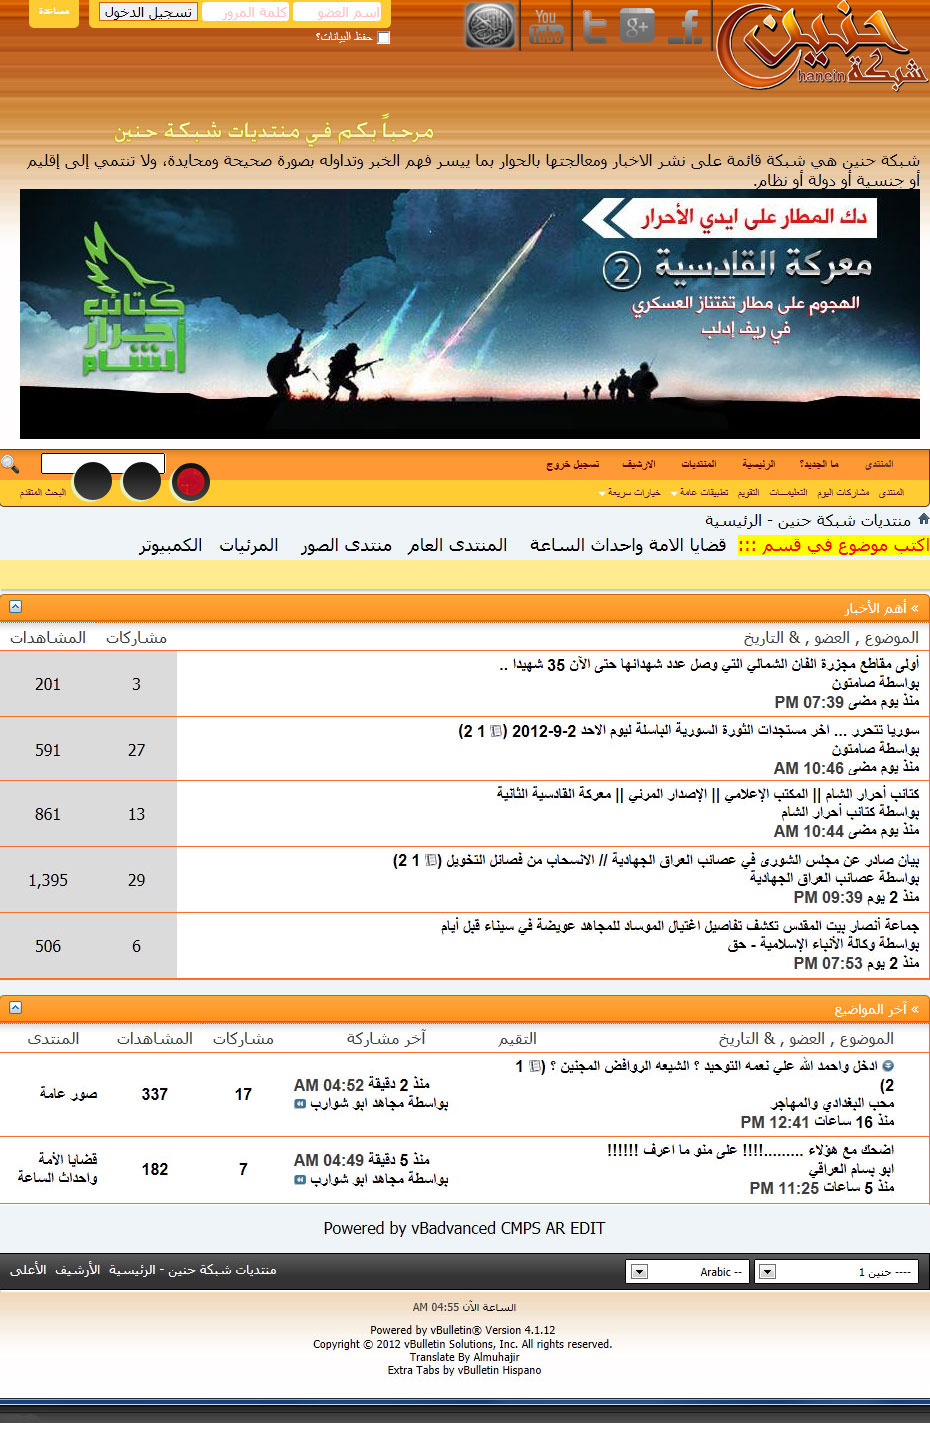 Islamic Jihad forum website